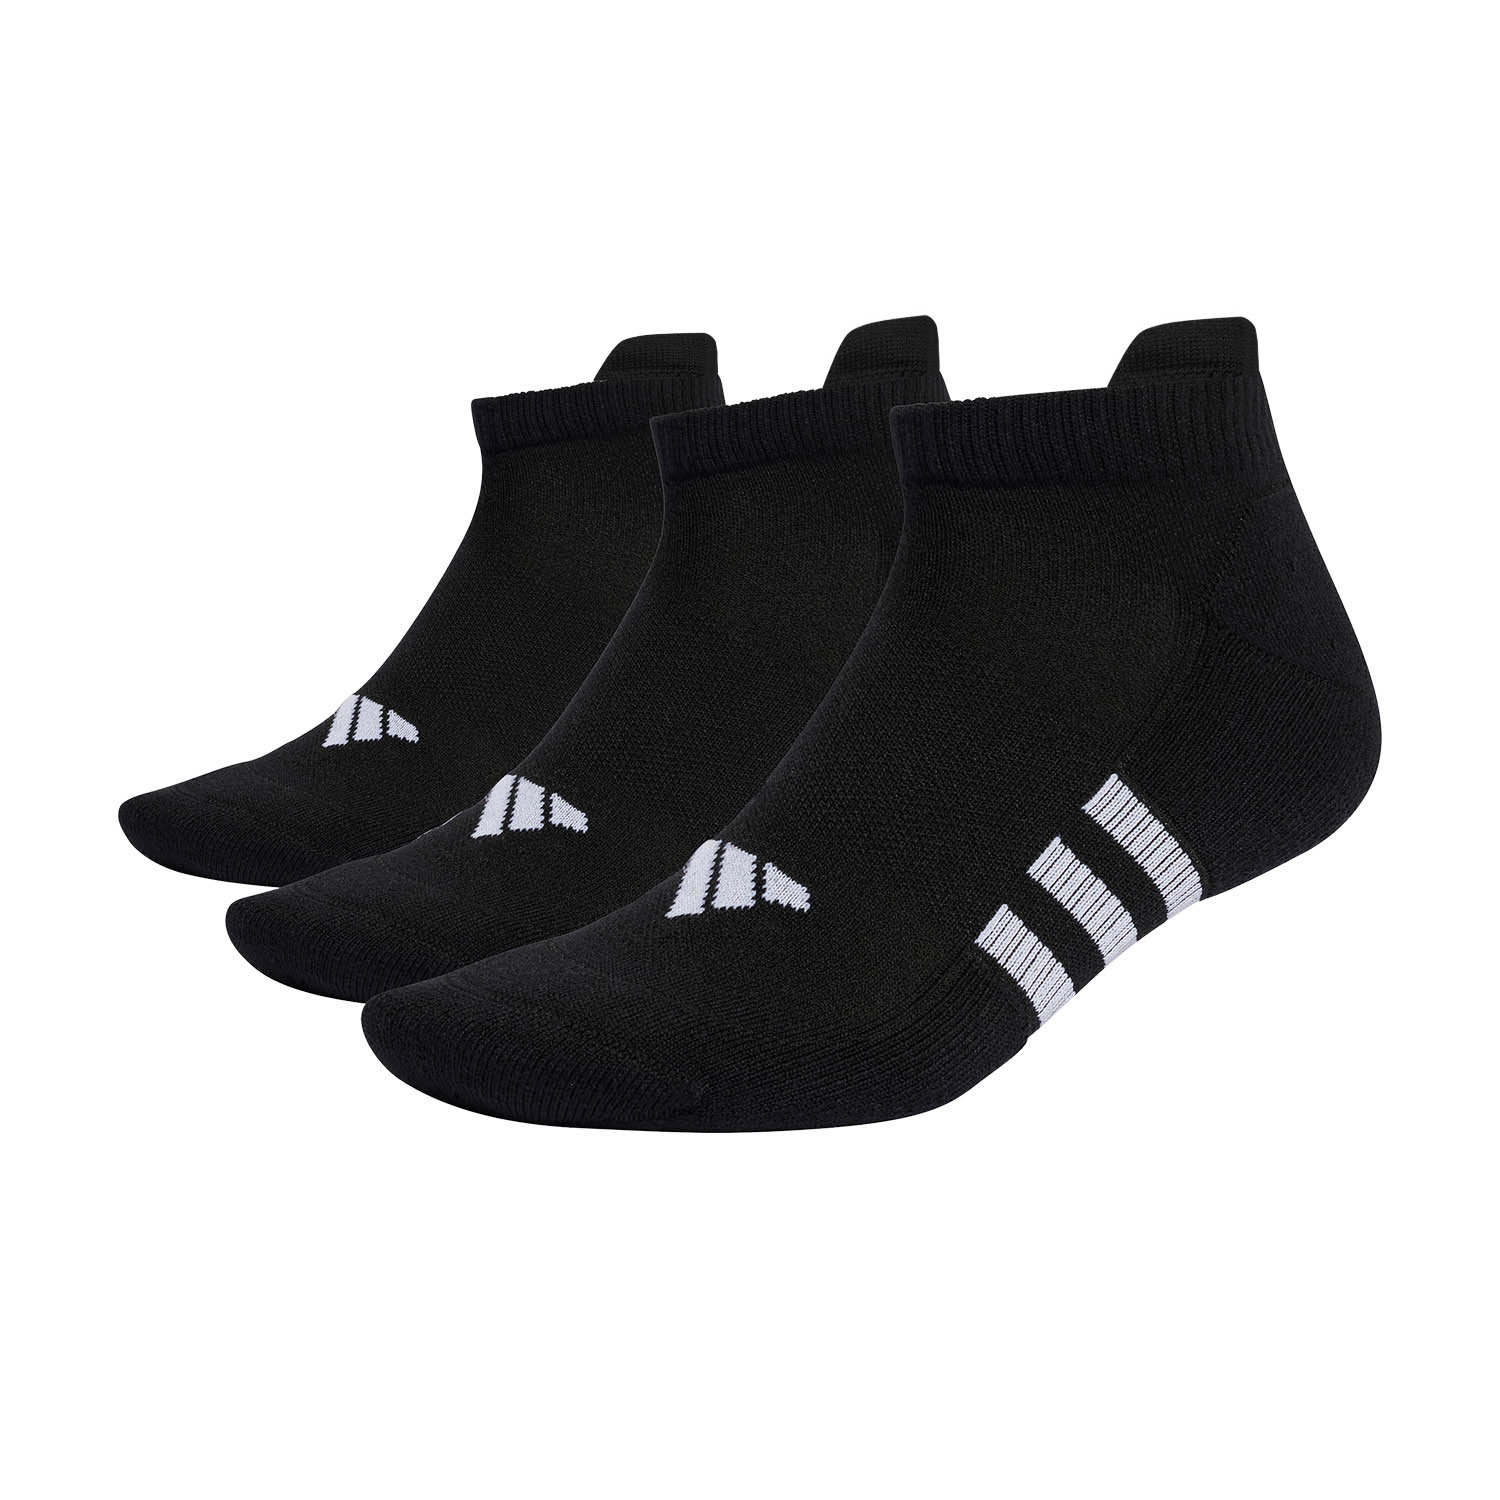 adidas Performance Cush x 3 Training Socks - Black